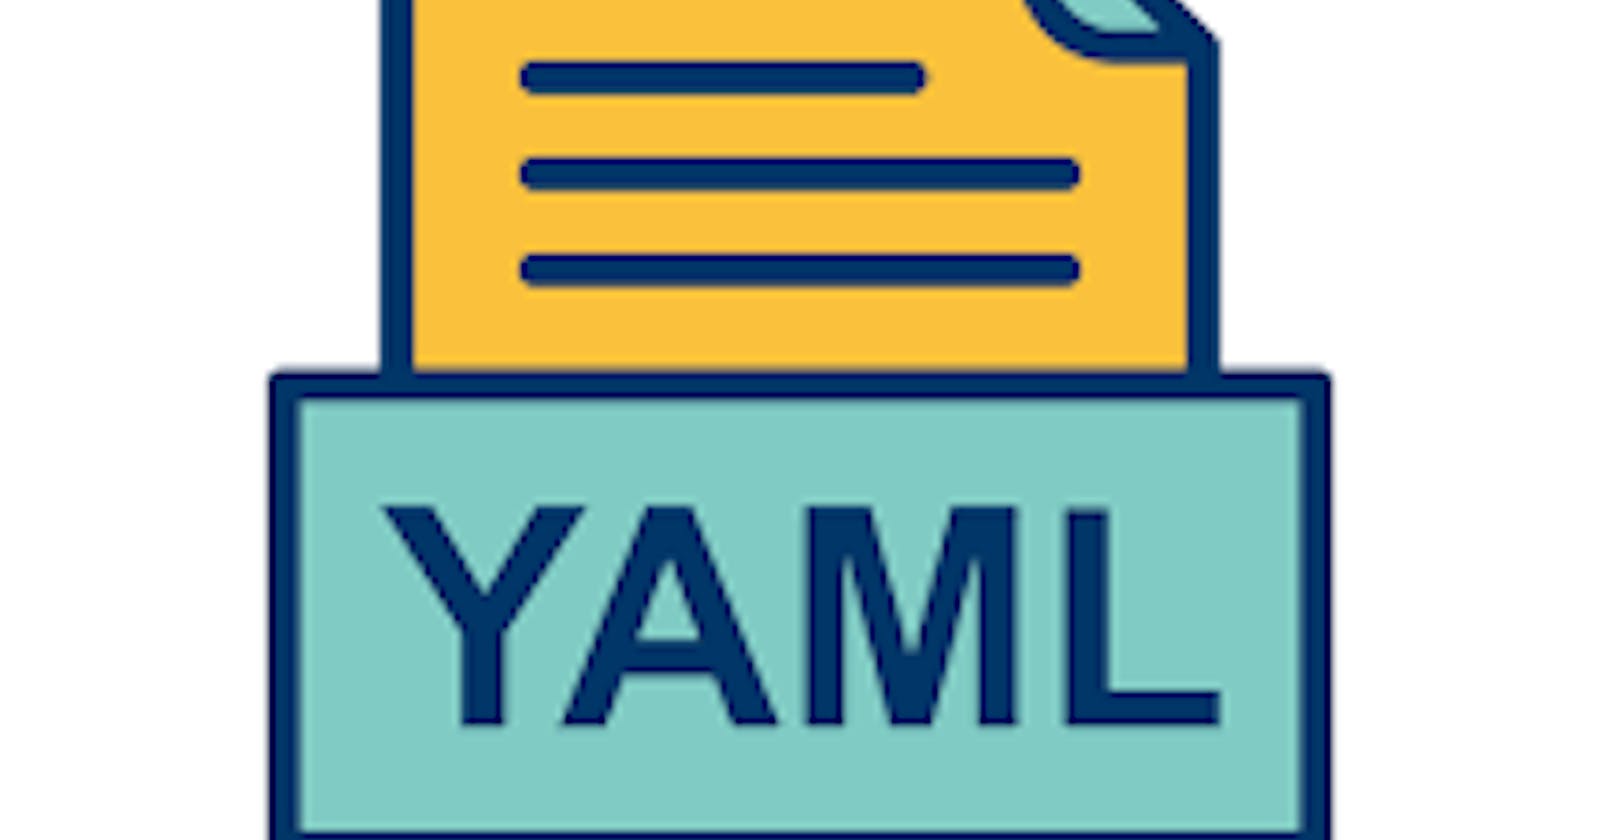 More on YAML